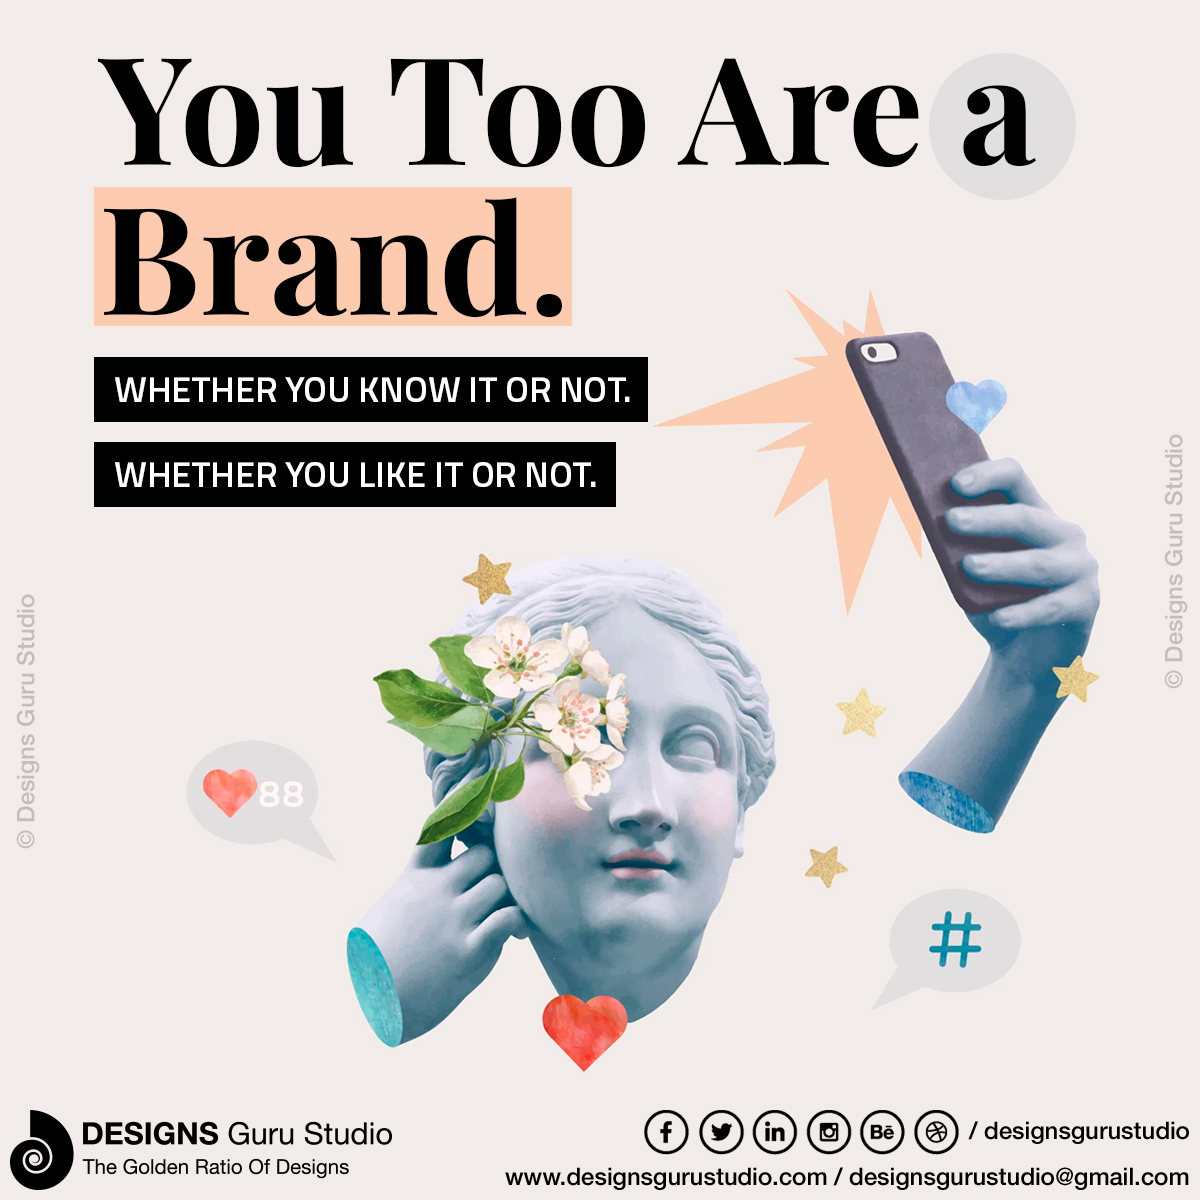 designsgurustudio.com 
#DesignsGuruStudio #BrandsGuruStudio #Brands #Brand #BrandDesign #BrandIdentityDesign  #BrandDesigner #BrandingDesigns #Rebranding #LogoDesign #StationeryDesign #PrintDesign #PackagingDesign #CorporateIdentityDeign #PrintCollateralDesign #BrochuresDesign